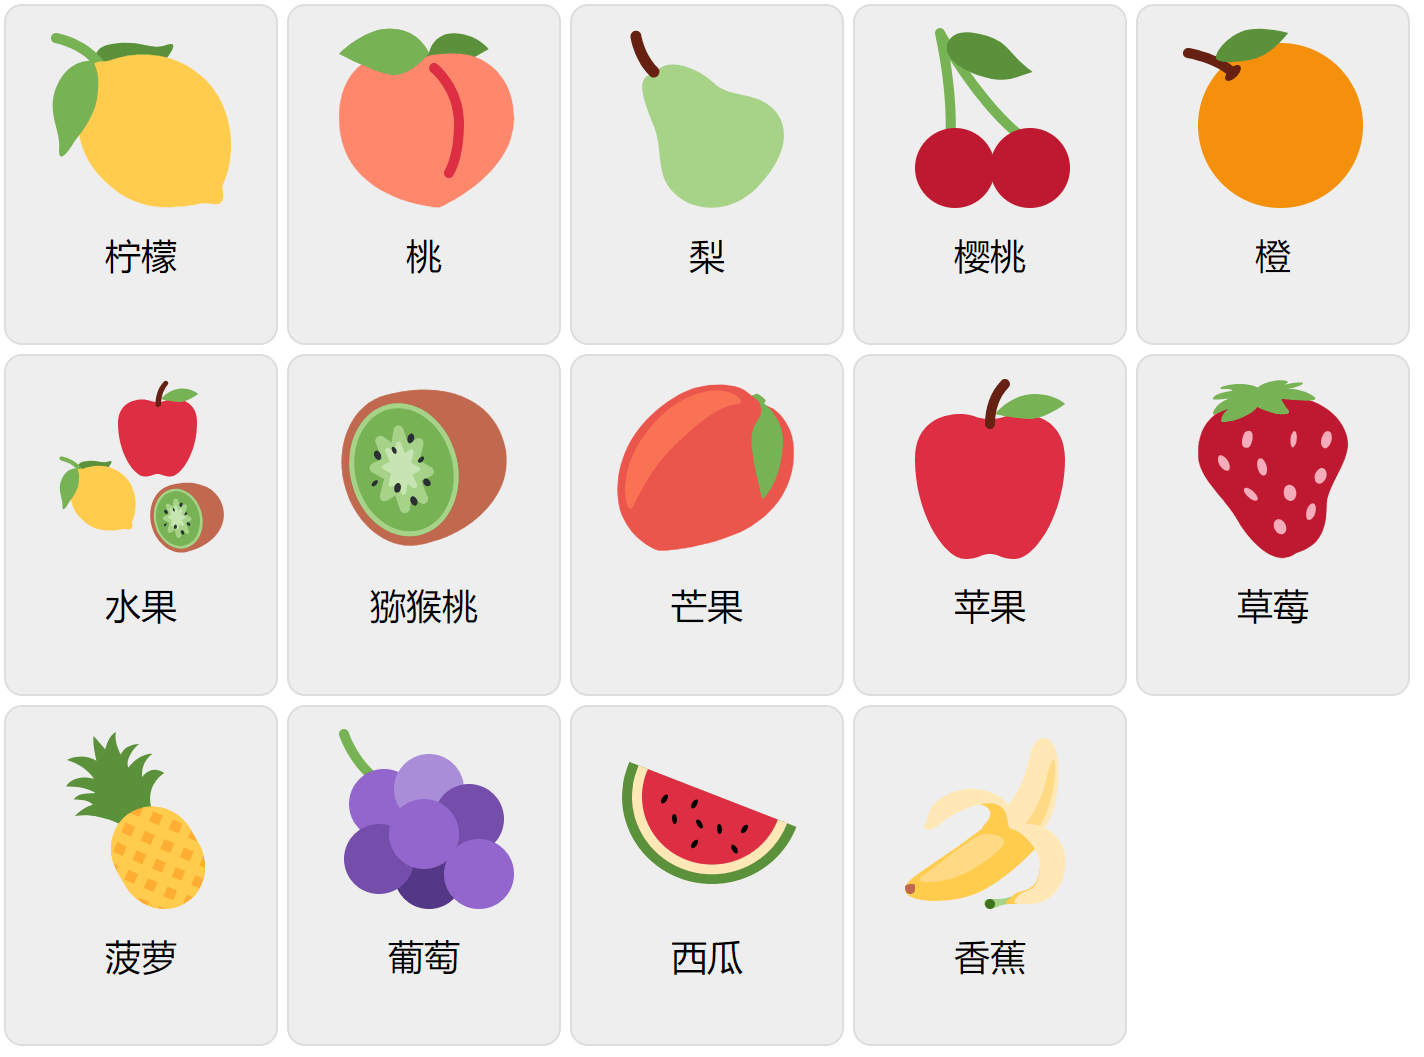 Fruits in Mandarin Chinese